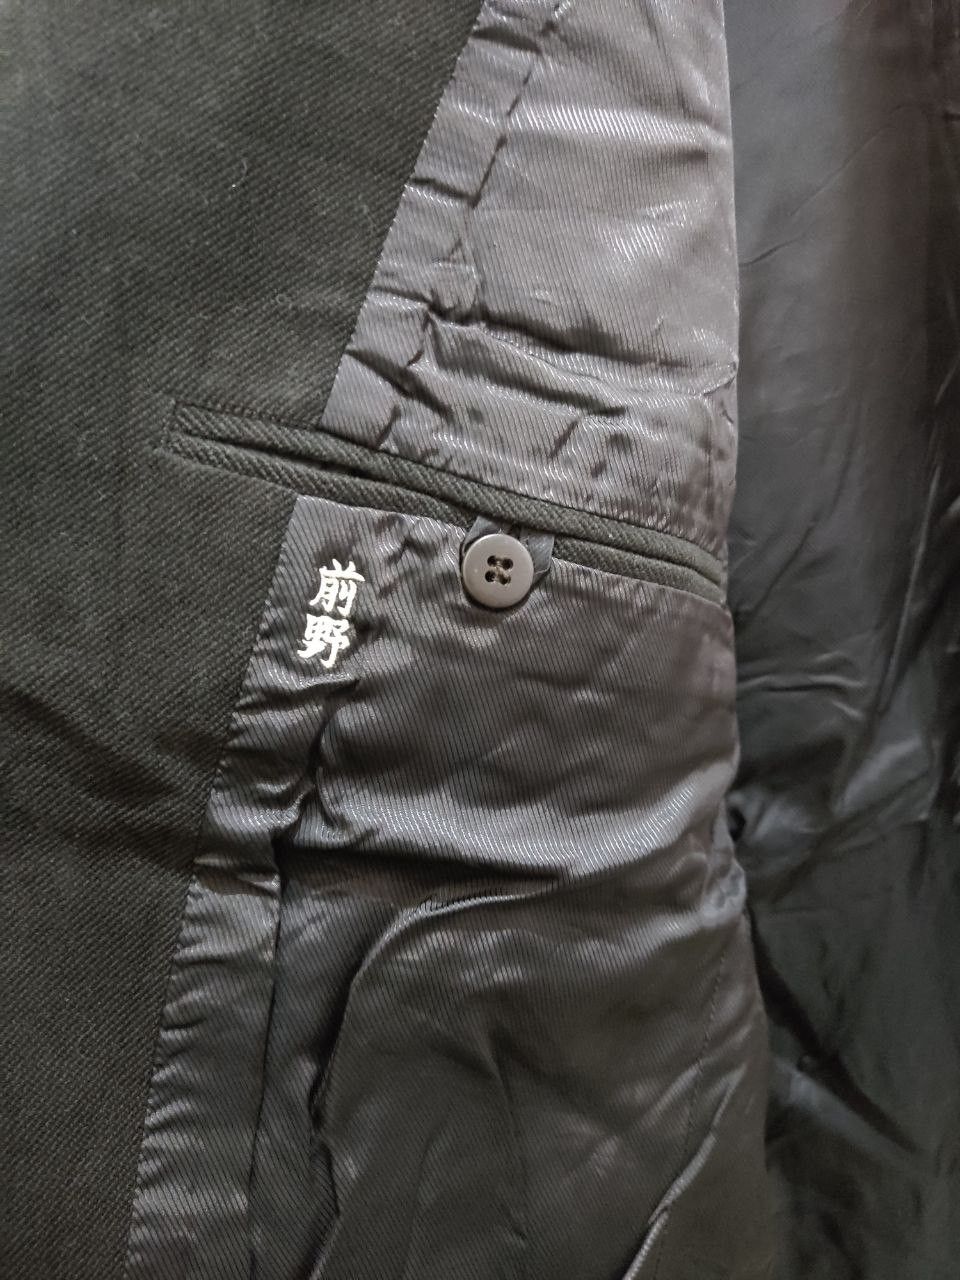 D'Urban Taylor Casual Japanese Designer Blazer Suit Jacket - 6